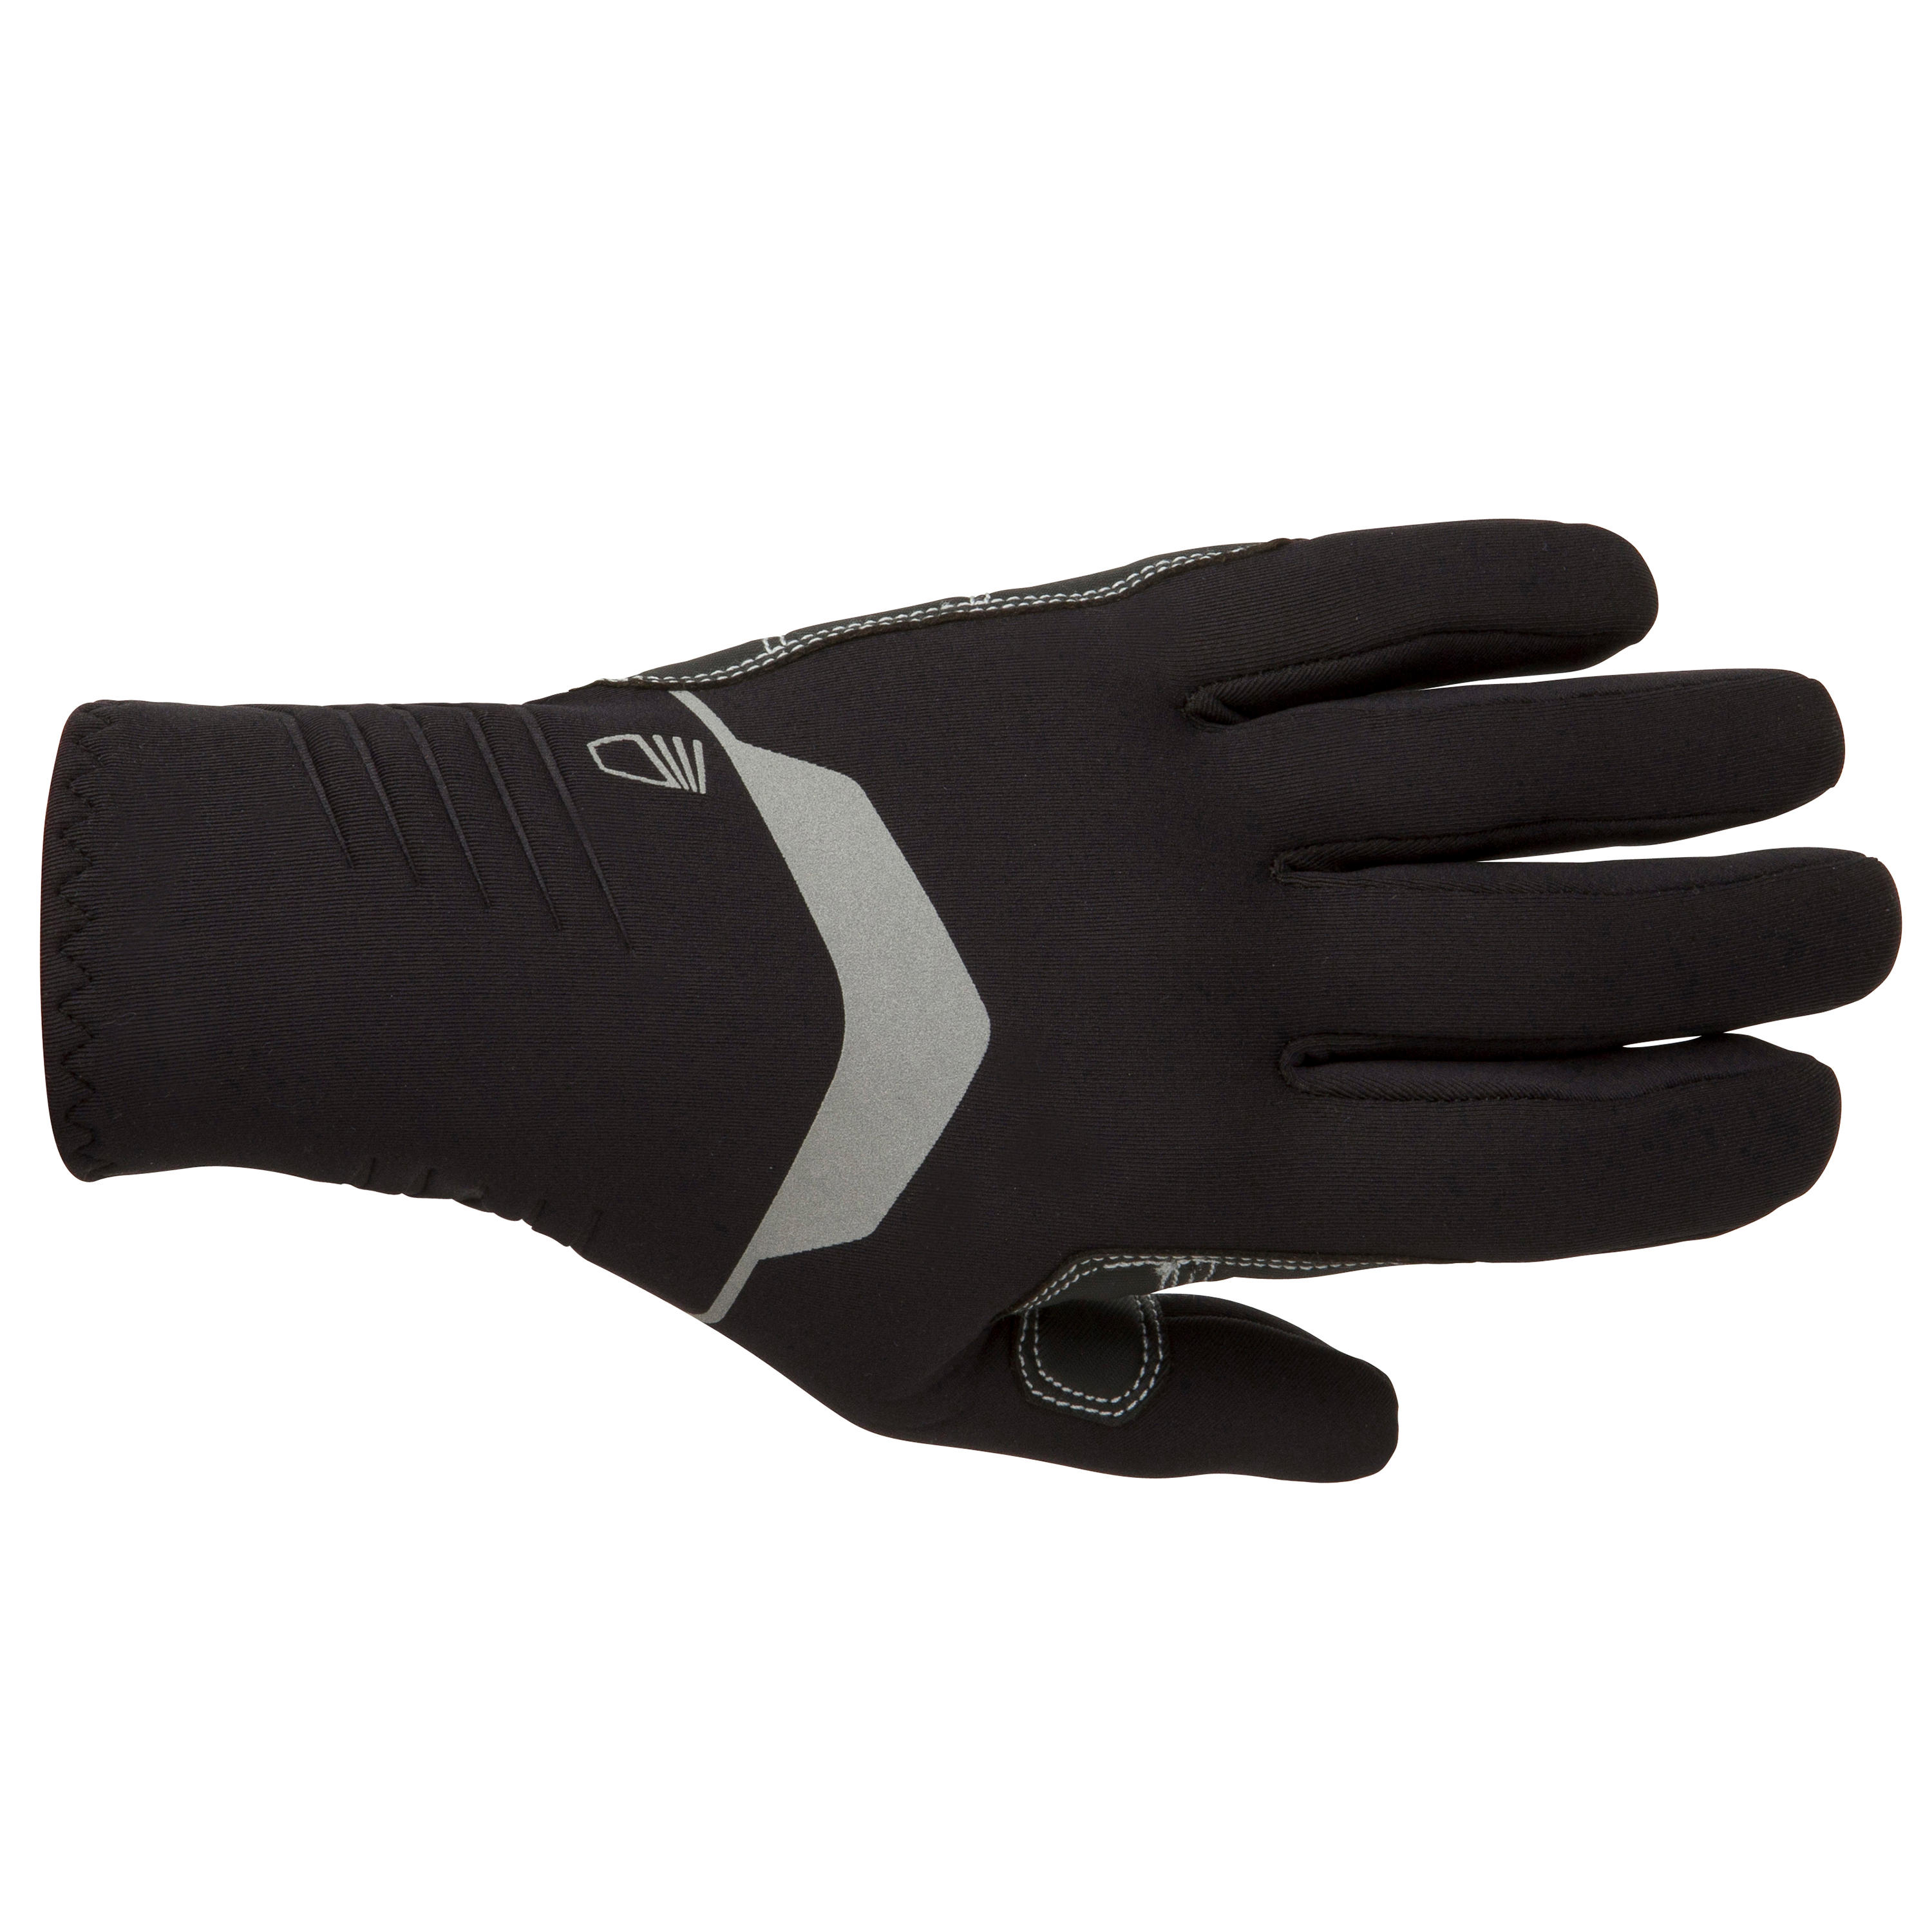 Adult sailing gloves 900 - 1 mm neoprene, black 2/5